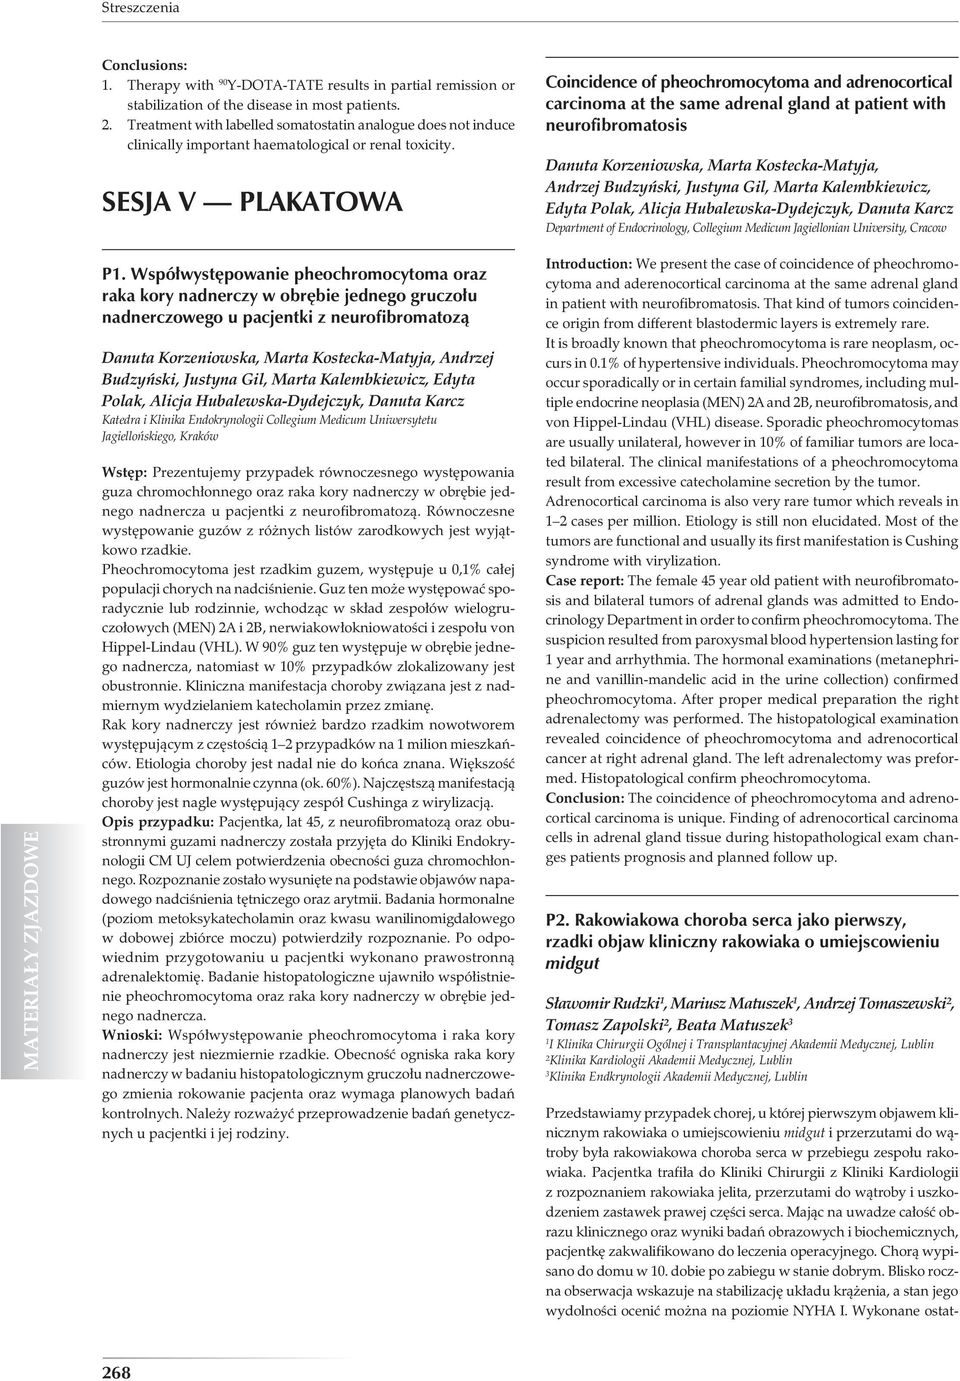 SESJA V PLAKATOWA Coincidence of pheochromocytoma and adrenocortical carcinoma at the same adrenal gland at patient with neurofibromatosis Danuta Korzeniowska, Marta Kostecka-Matyja, Andrzej